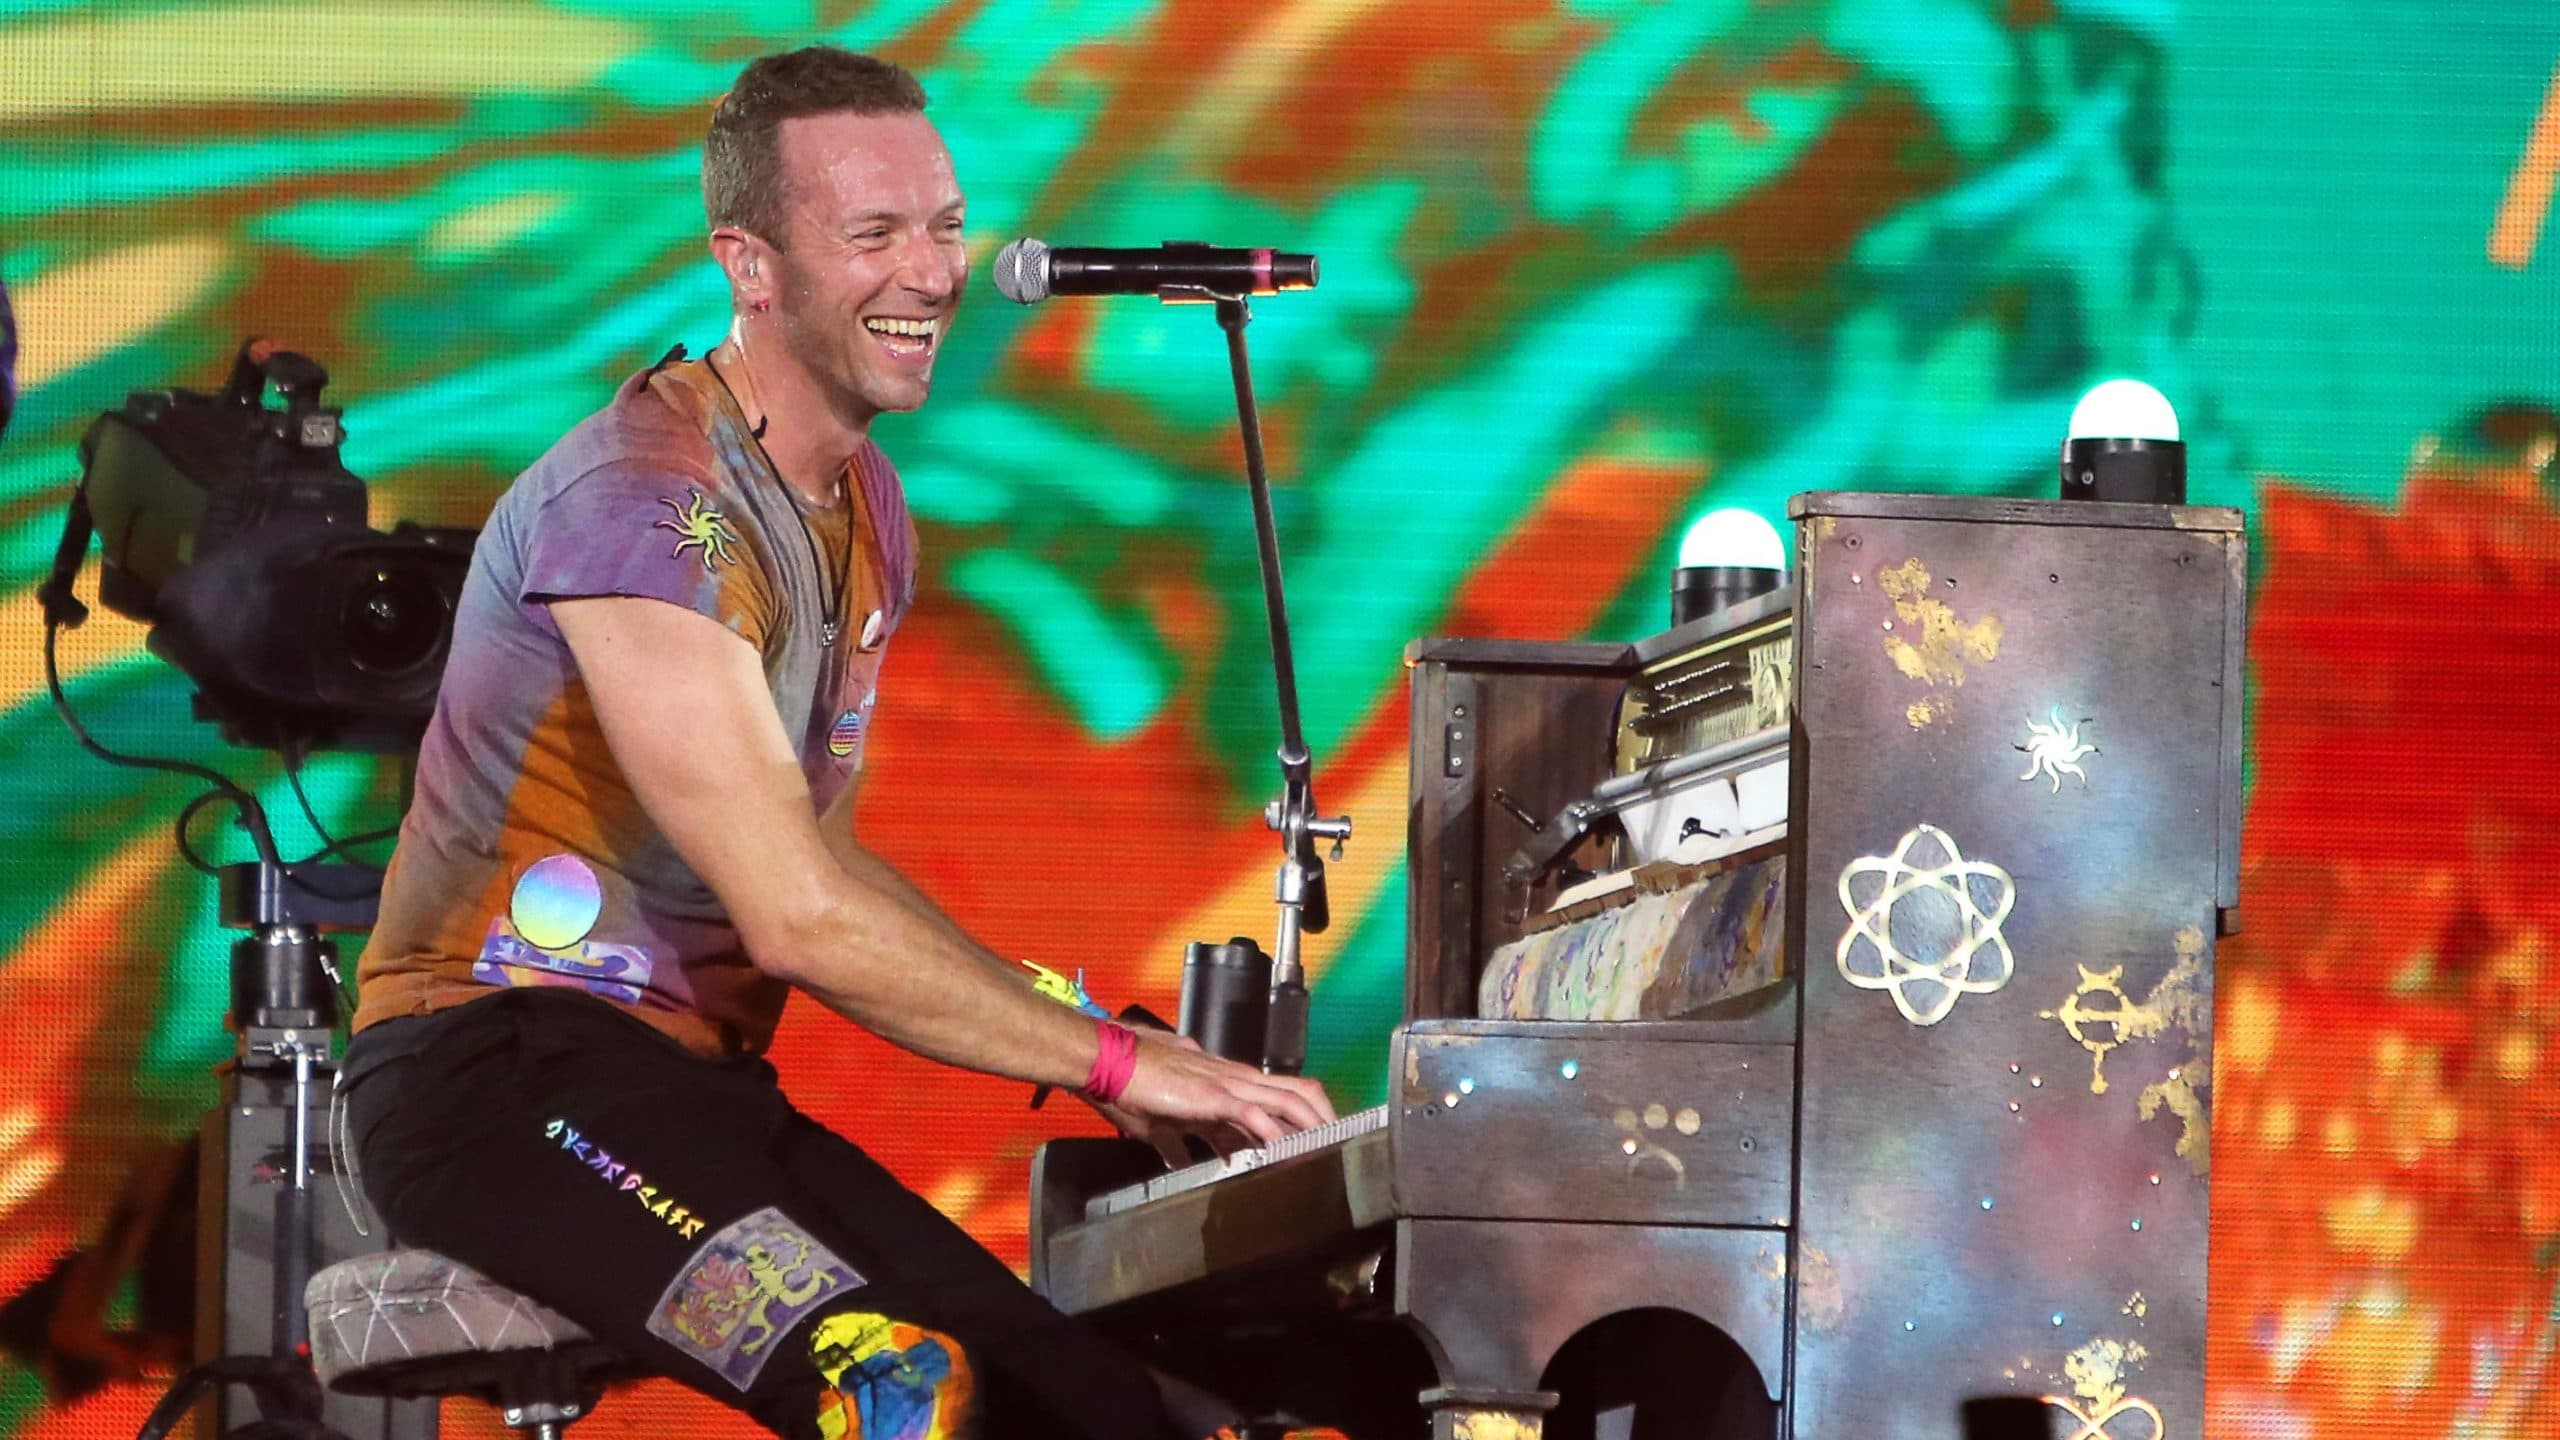 Fix You, Yellow, Viva La Vida – minden idők legjobb Coldplay dalai